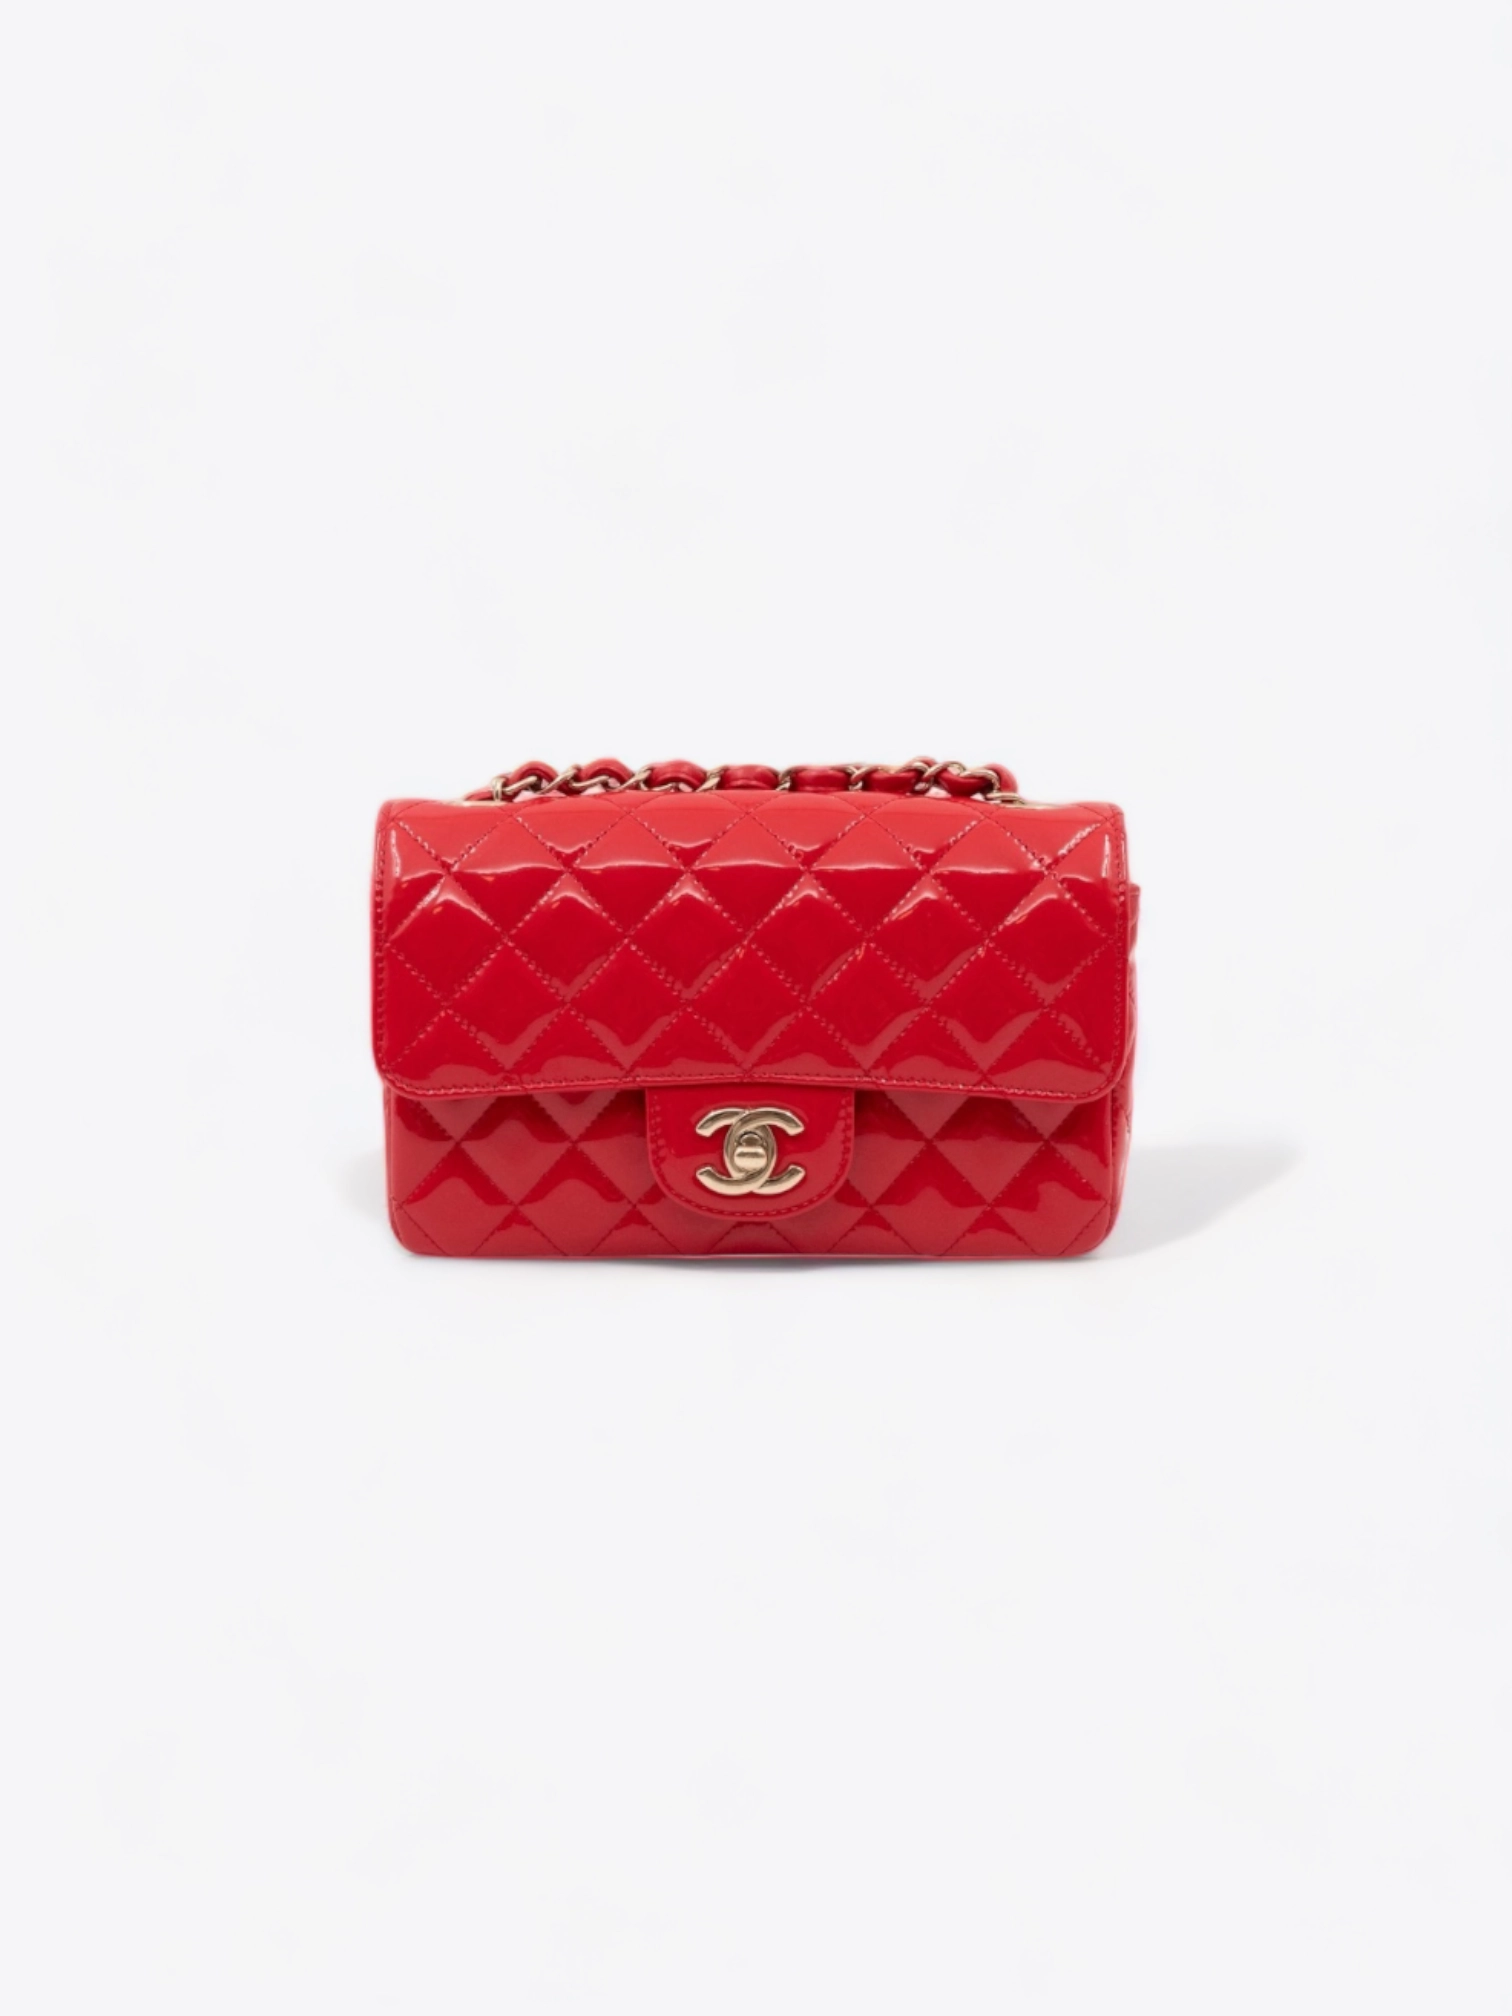 WELPOP welpop Location Sac Chanel Classic Mini Rectangulaire Rouge Cuir verni 0